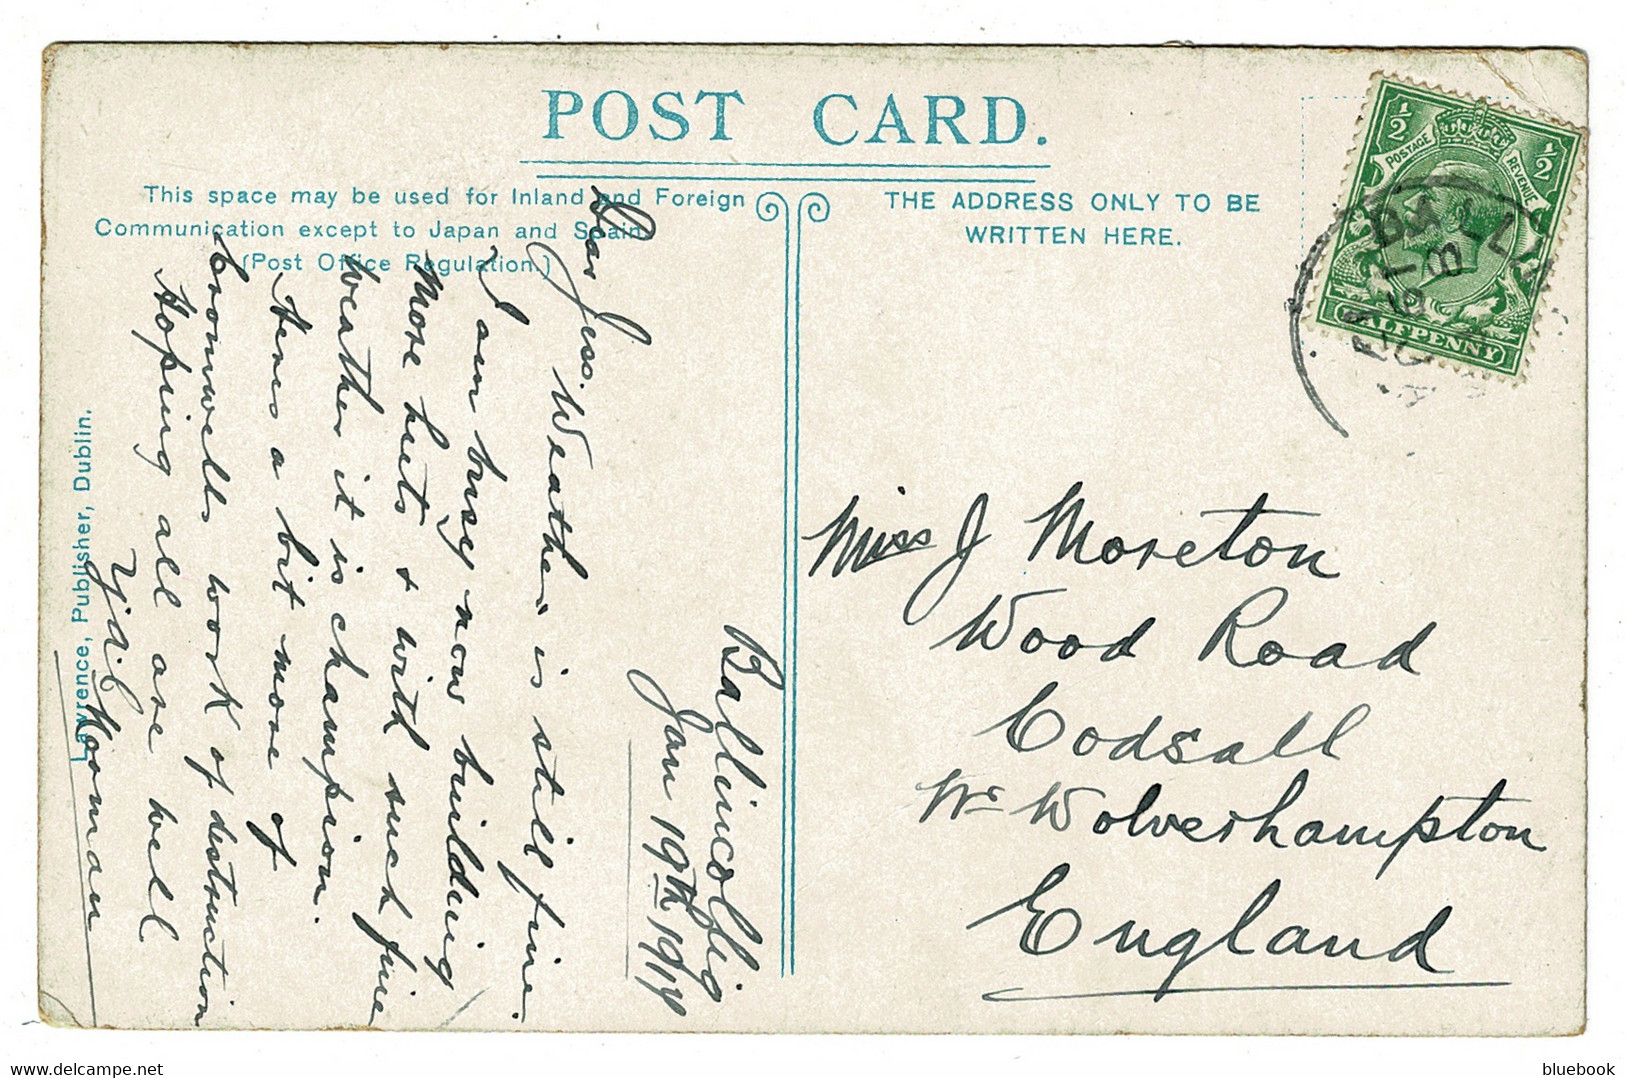 Ref 1417 - 1917 Postcard - Cromwell's Bridge Glengarriff - County Cork - Ireland Eire - Cork